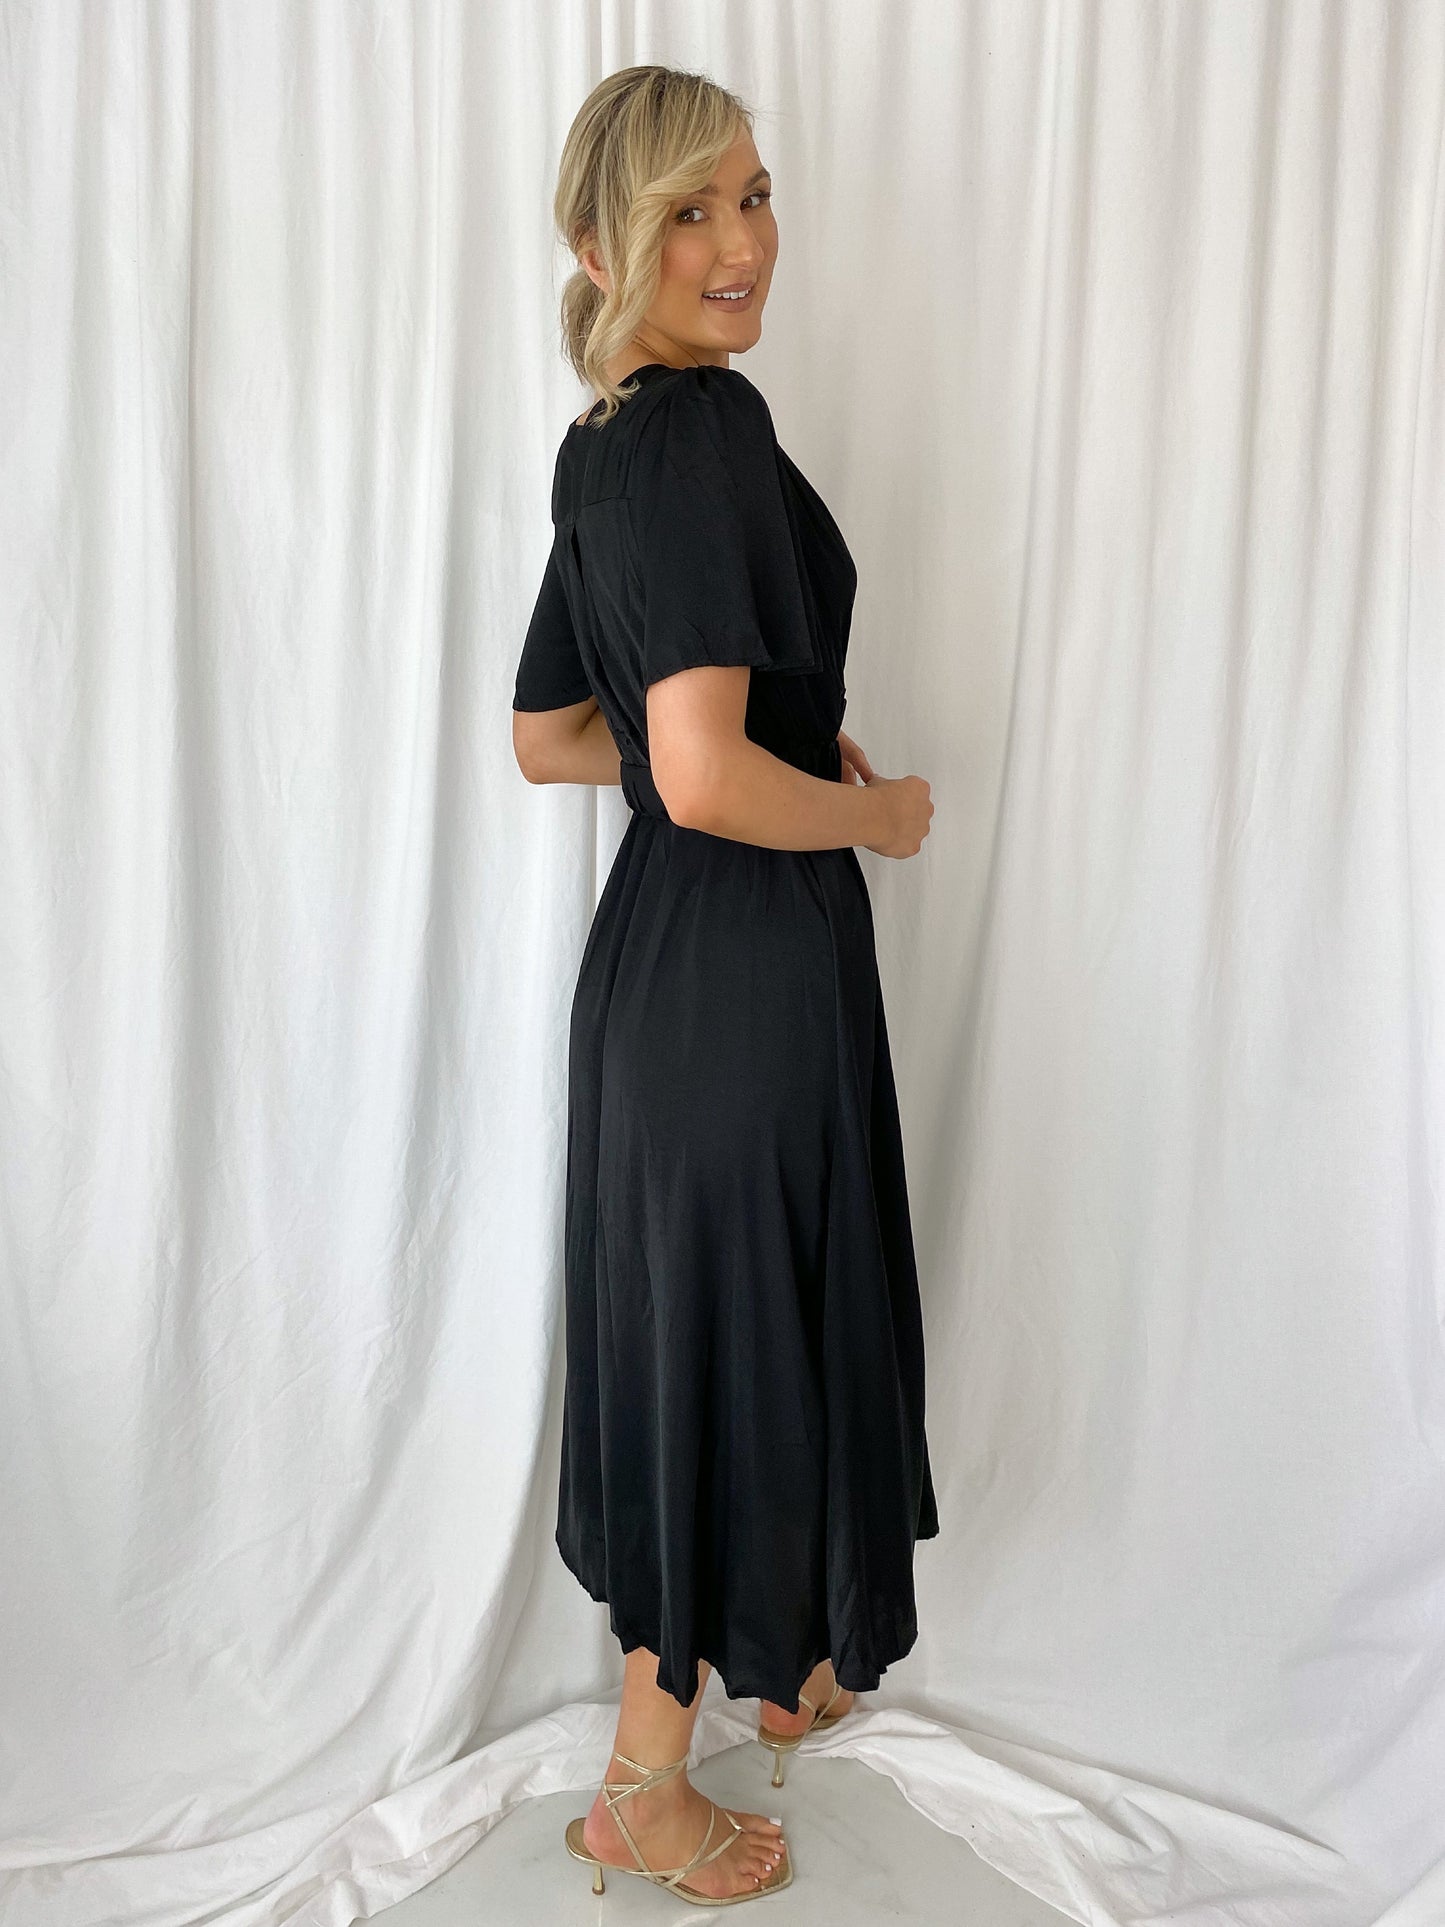 Norah Short Sleeves Belted Dress - Black